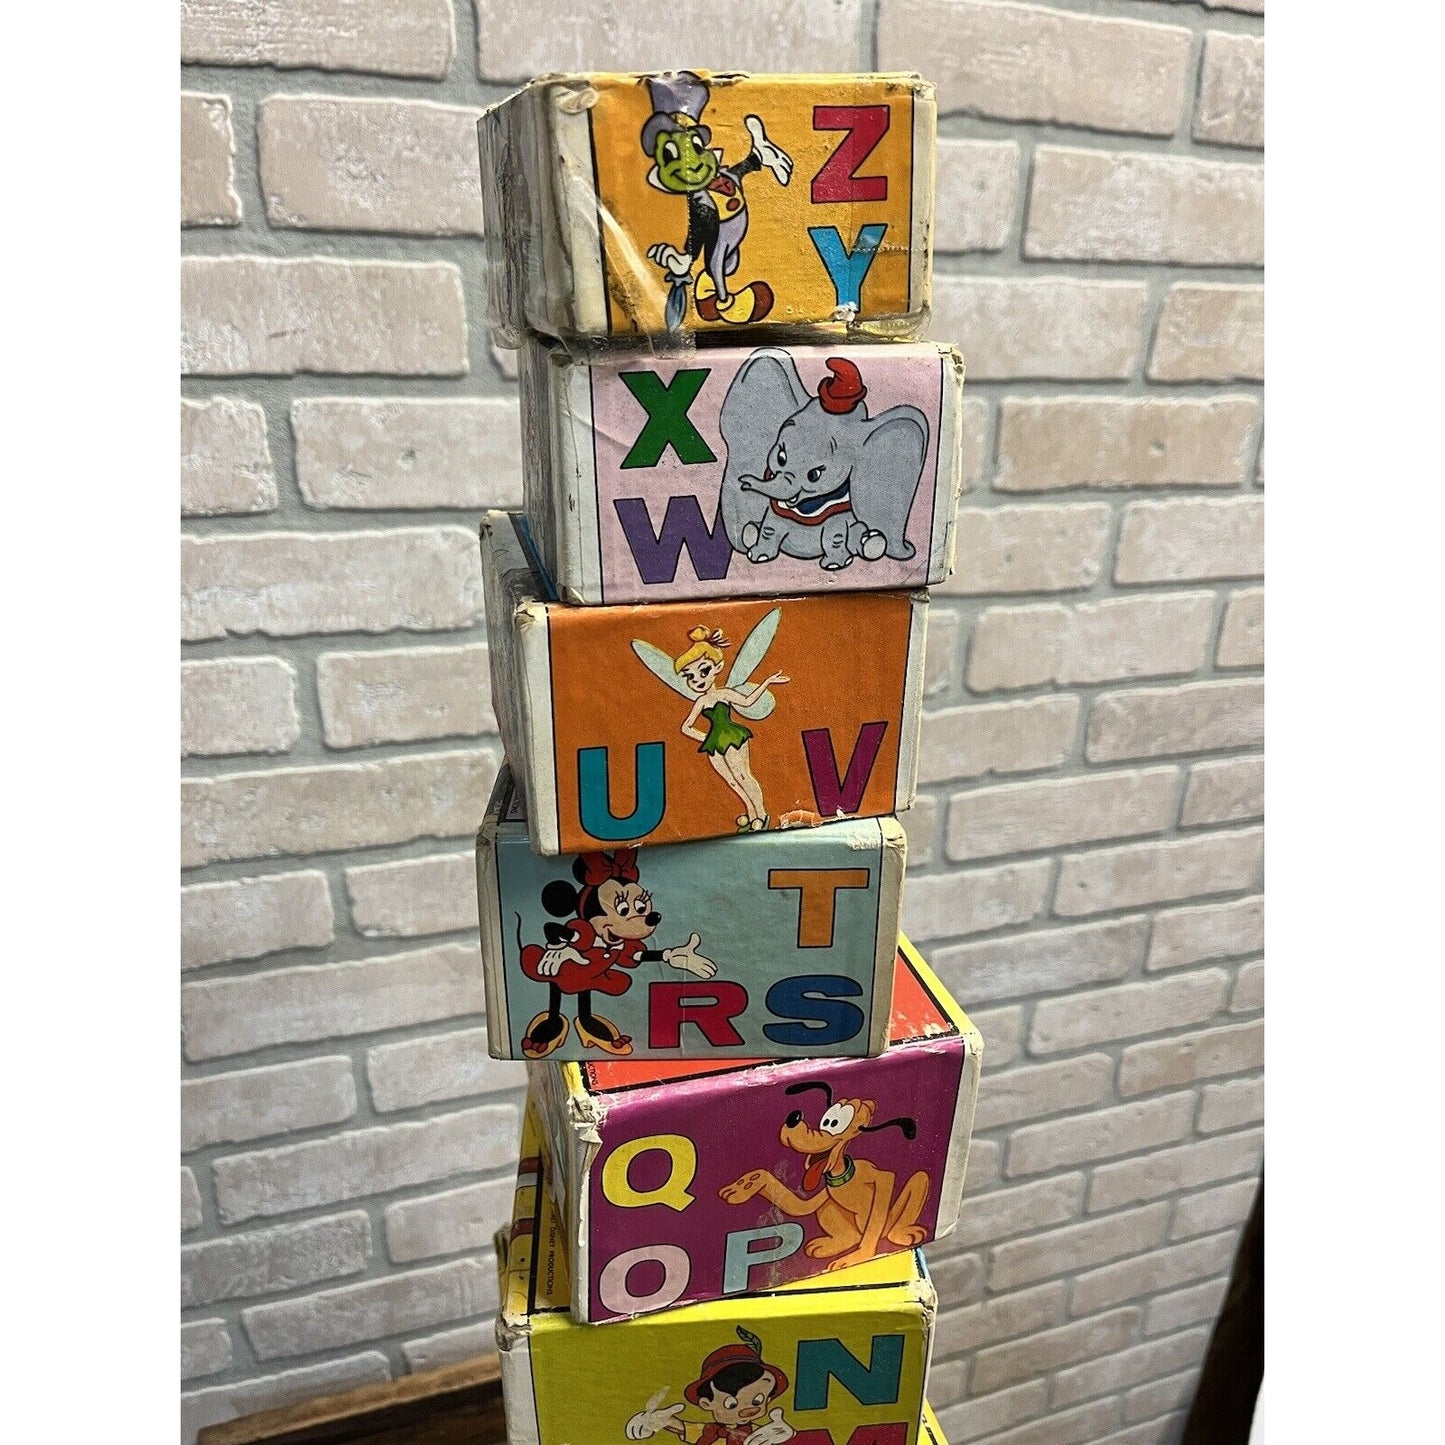 Vintage c1960s Walt Disney Alphabet / Number Children's Learning Toy Blocks